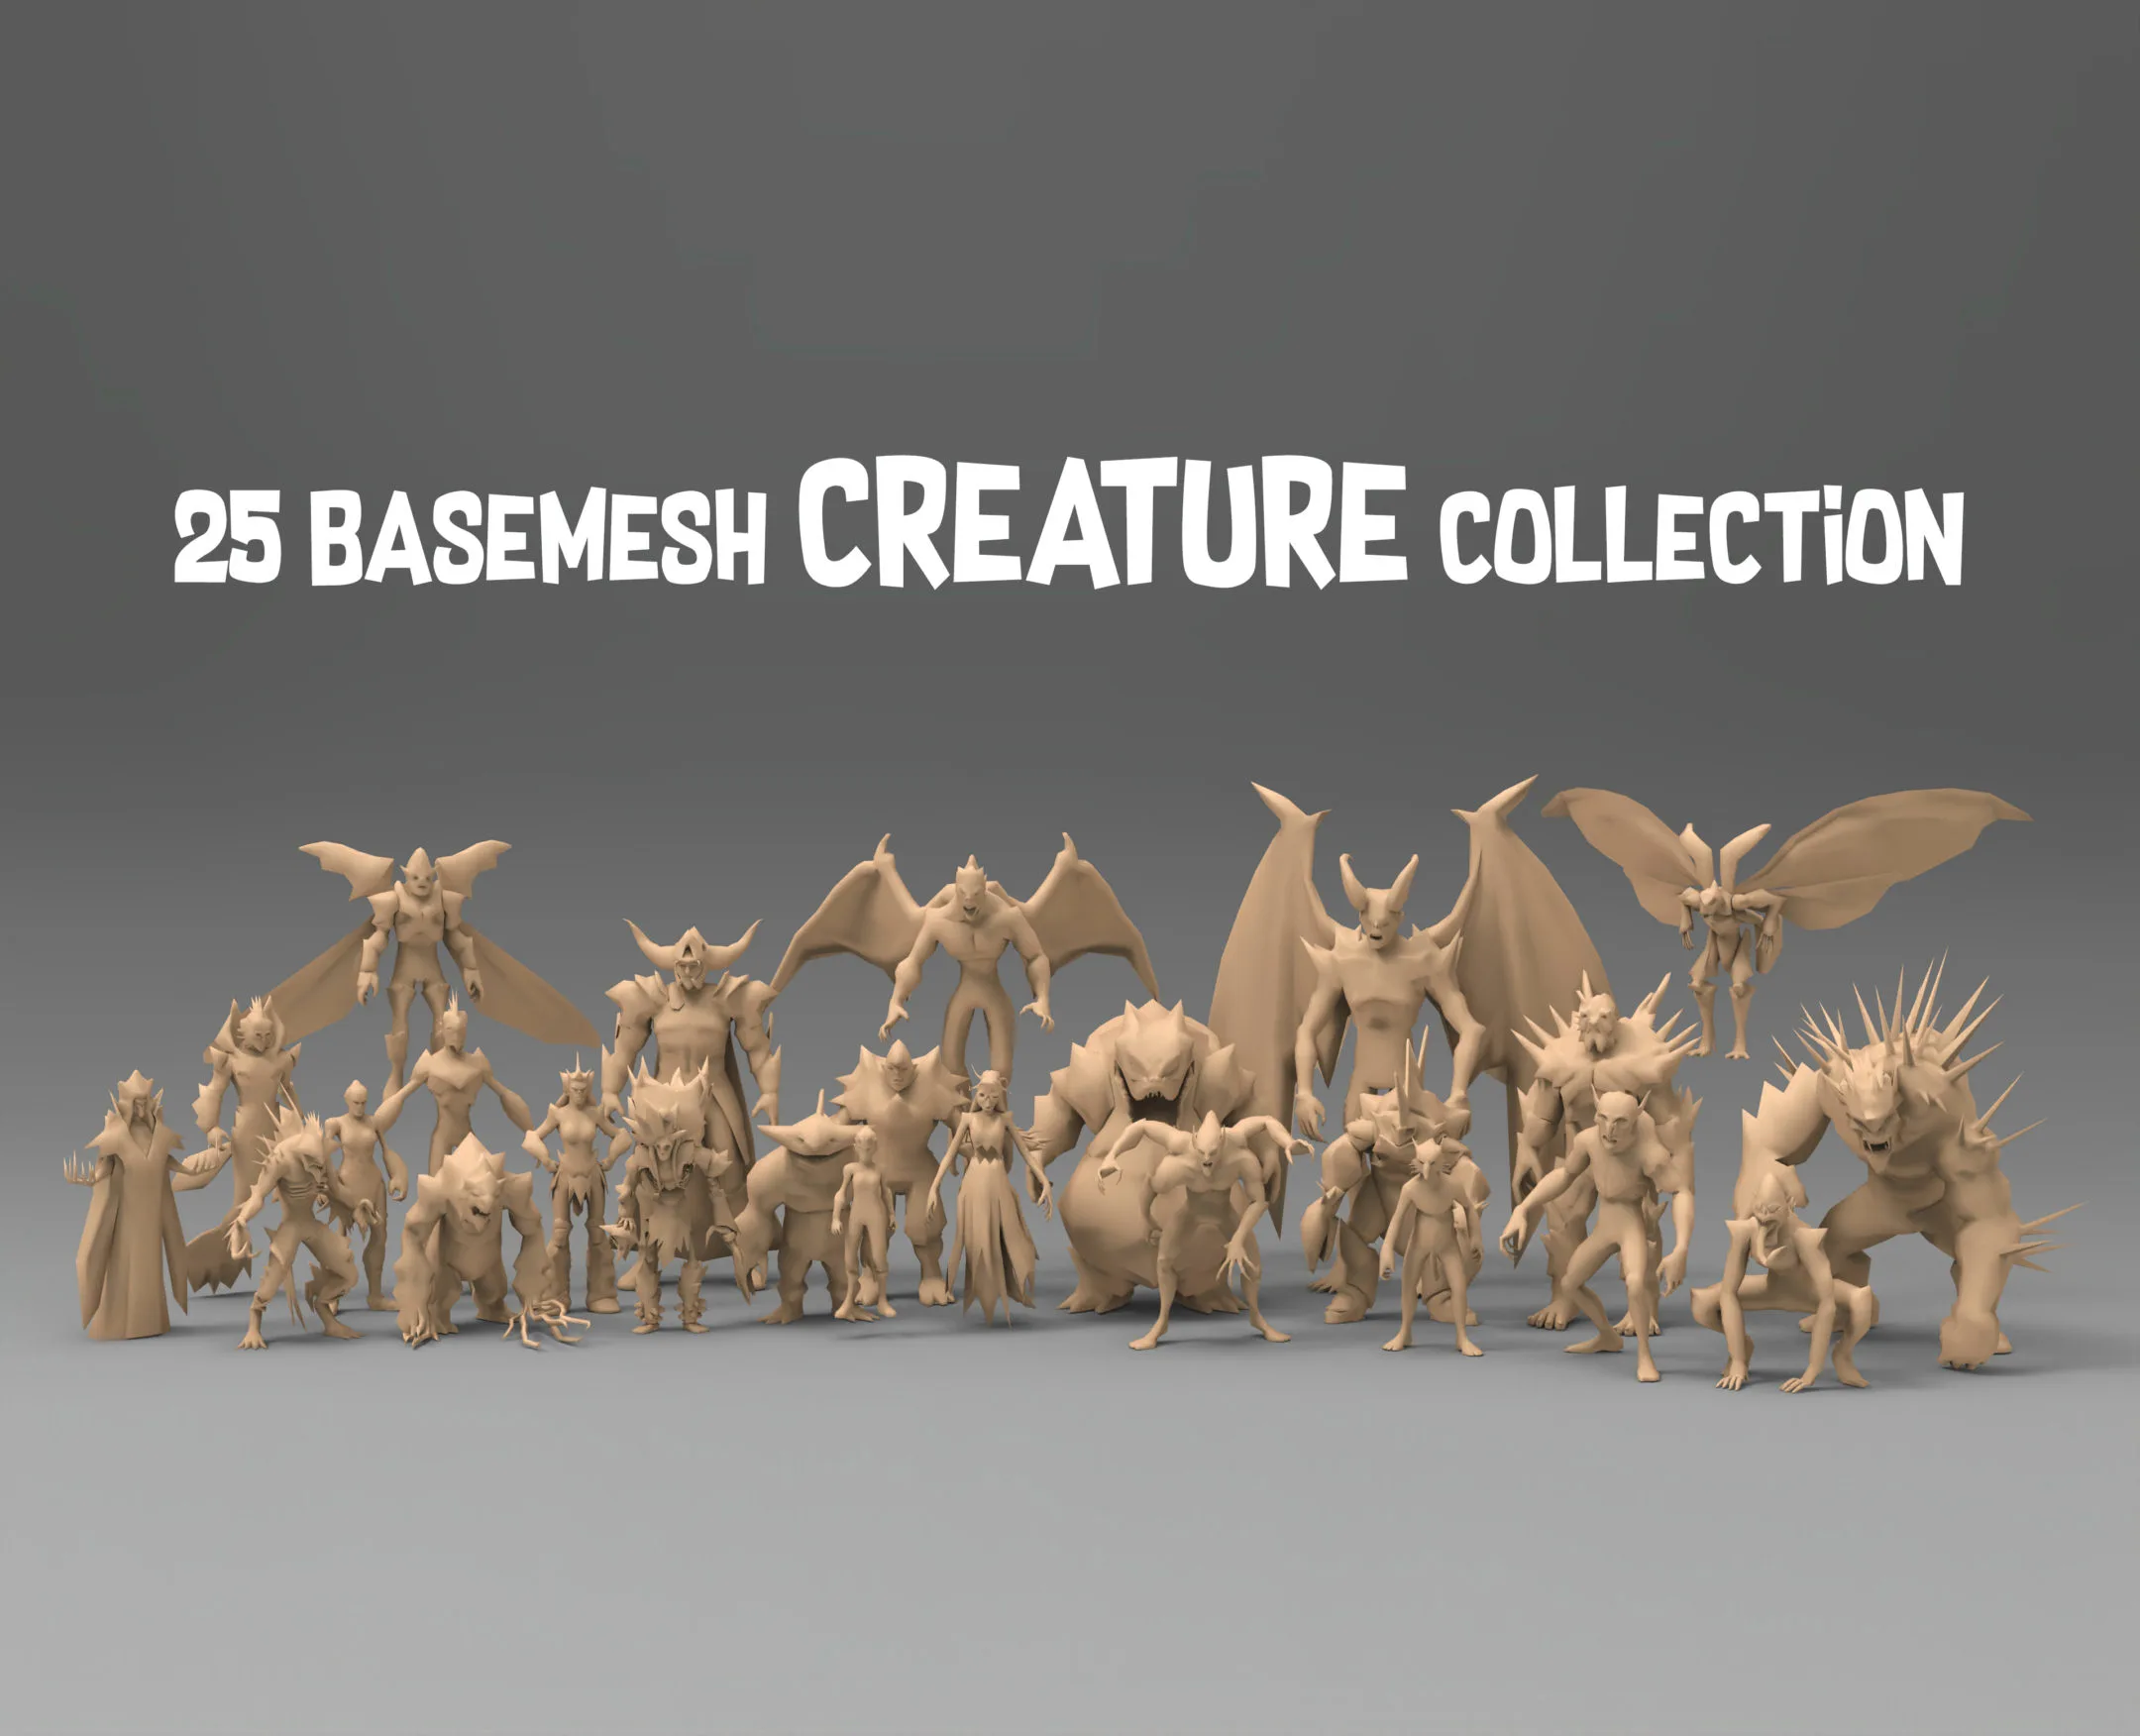 25 Basemesh creature collection